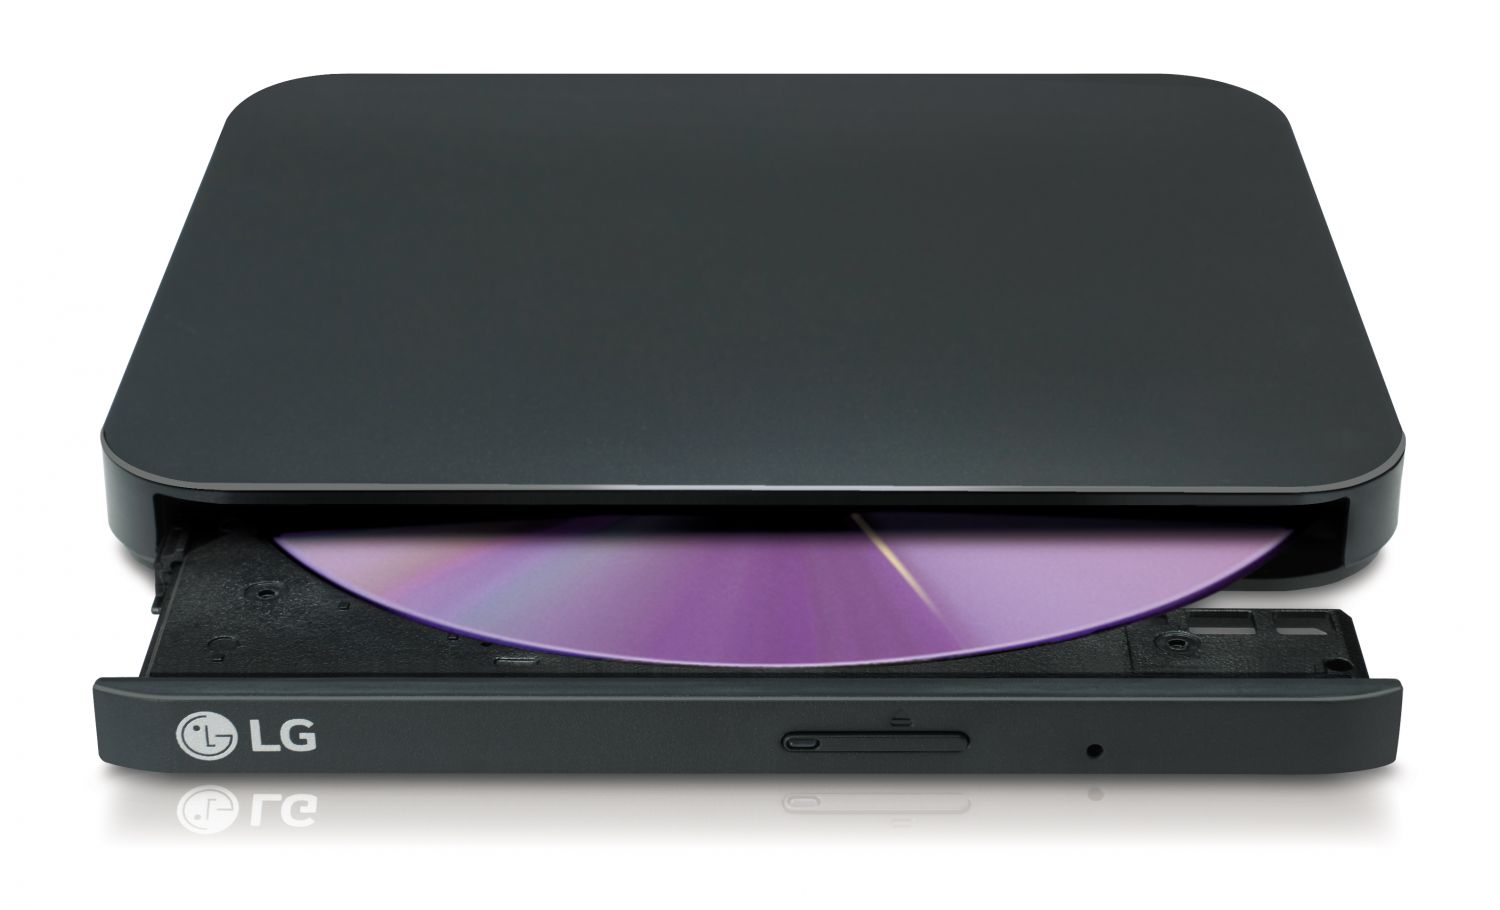 GP90EB70 - Front disc loader, CE, DVD Super Multi DL, USB 2.0, CD-R,CD-ROM,CD-RW,DVD+R,DVD+RW,DVD-R,DVD-ROM,DVD-RW